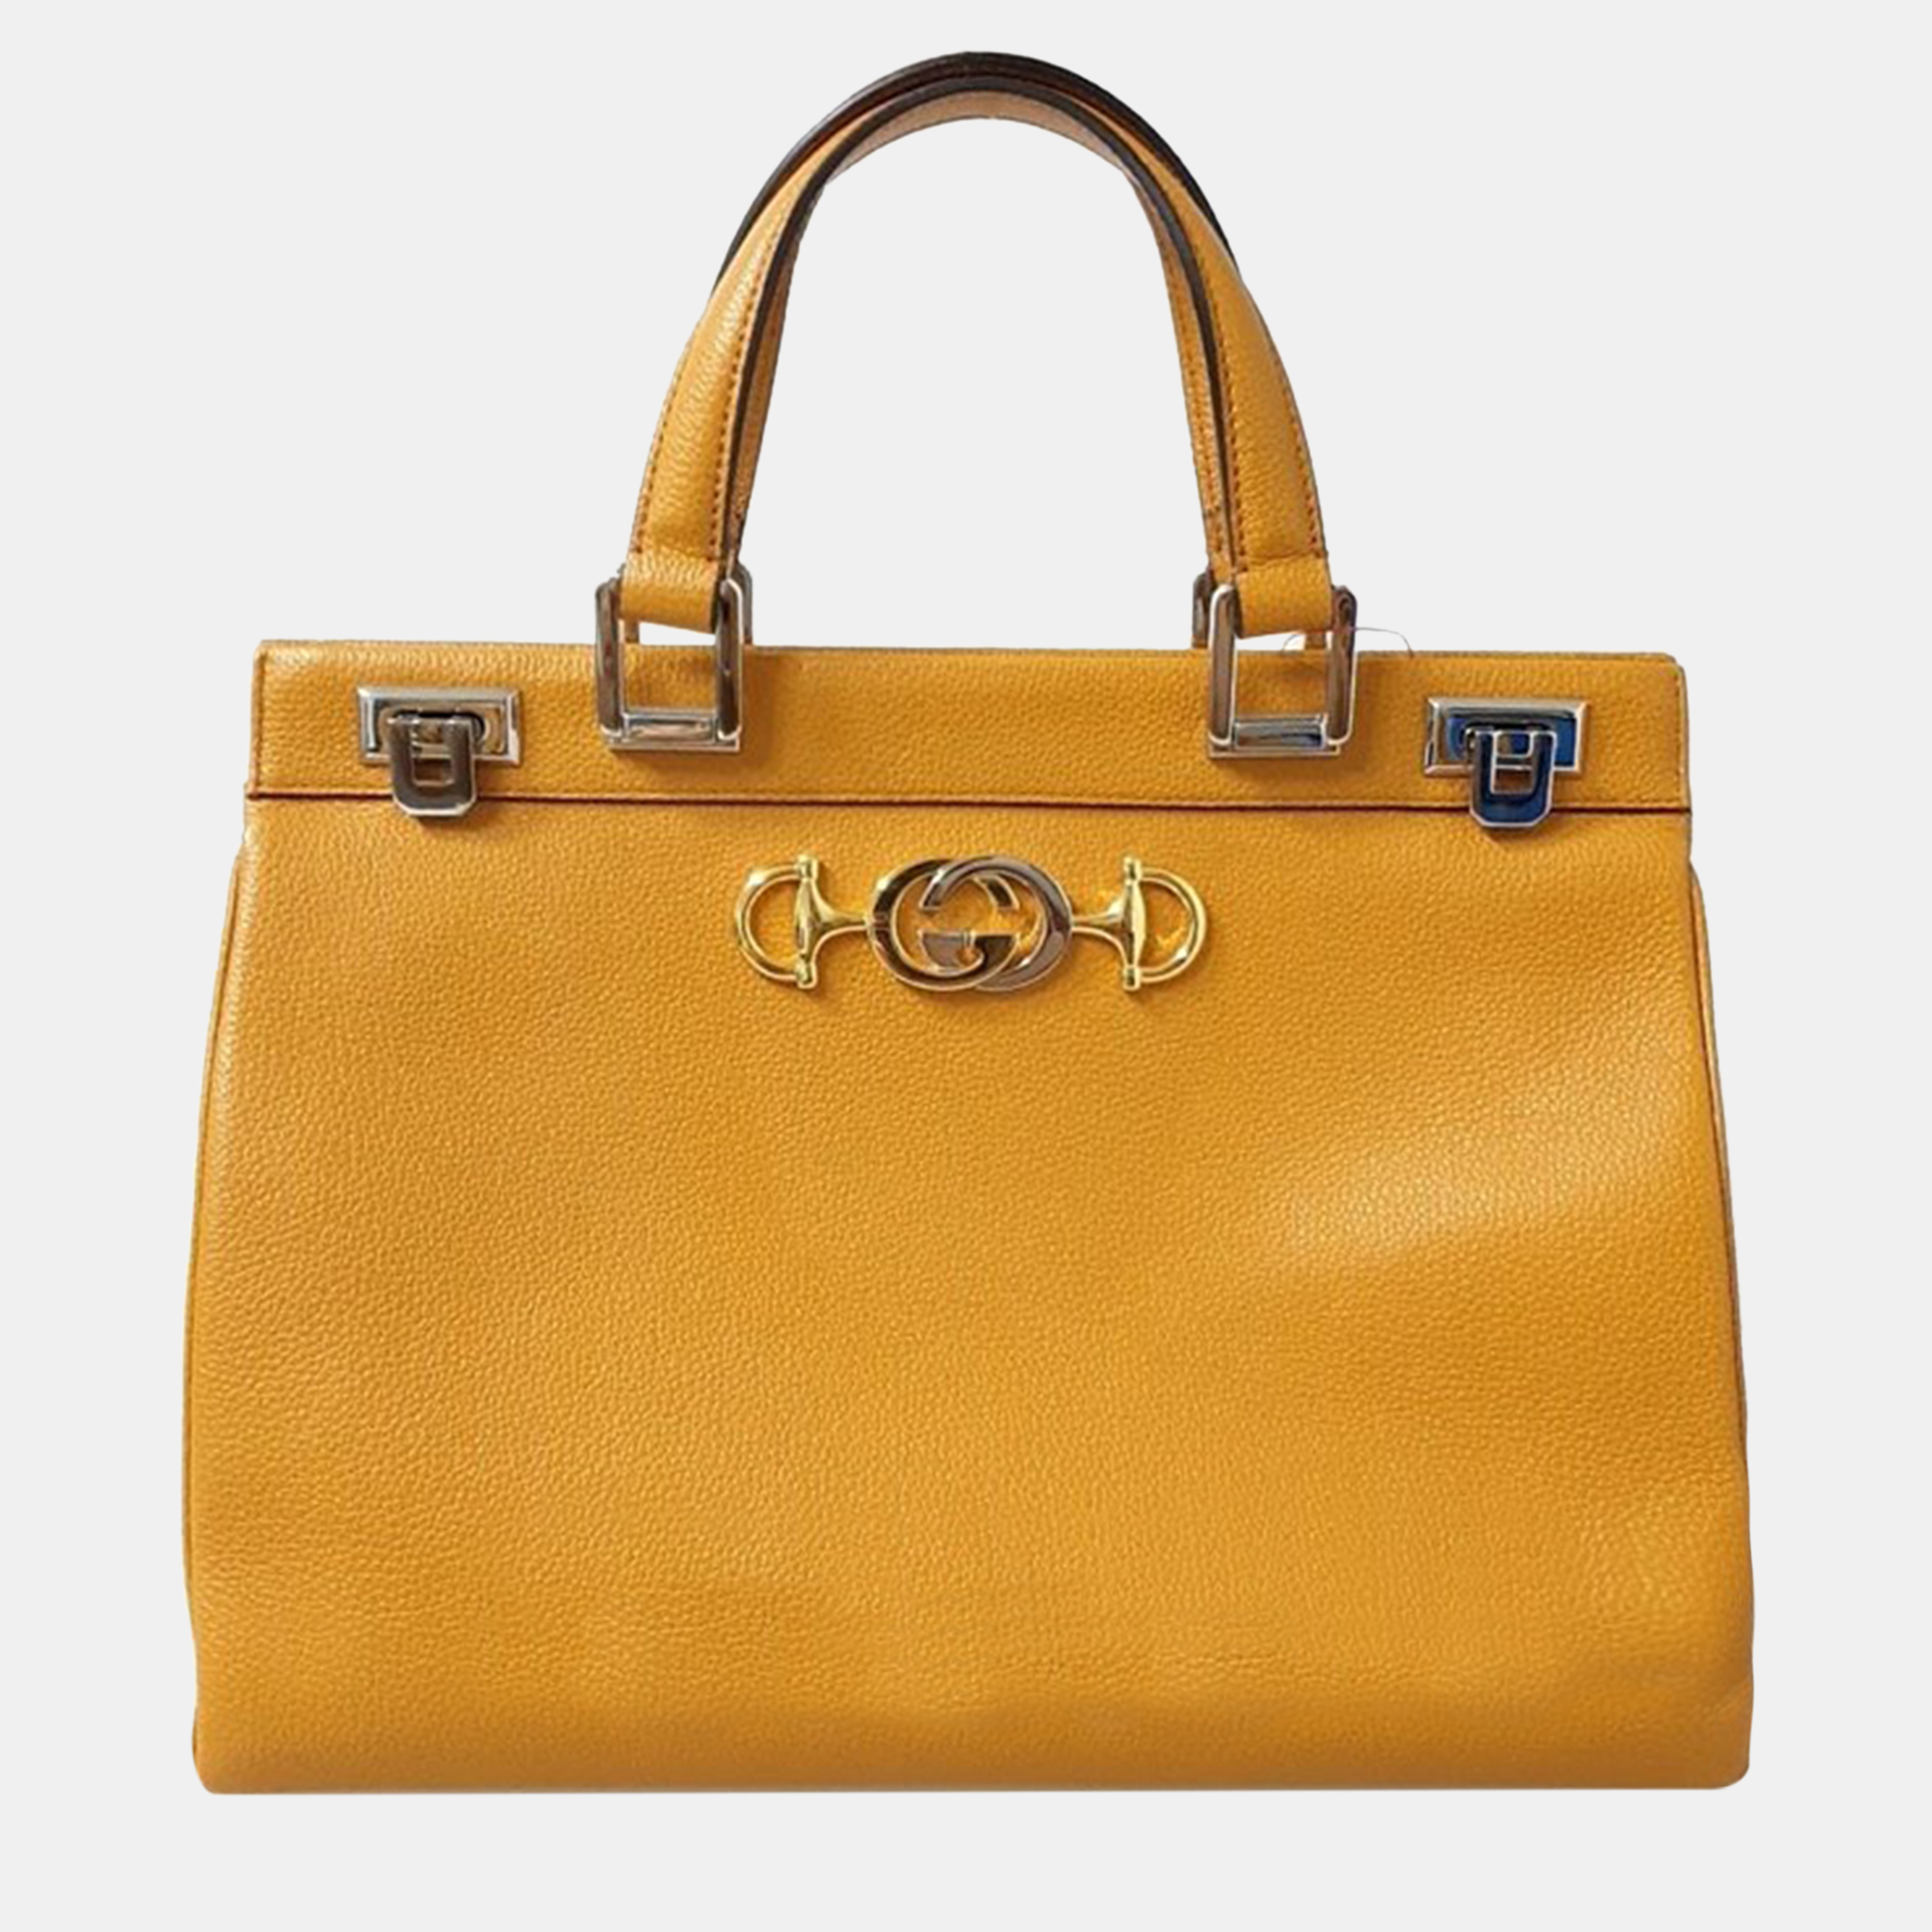 Gucci yellow leather medium zumi tote bag